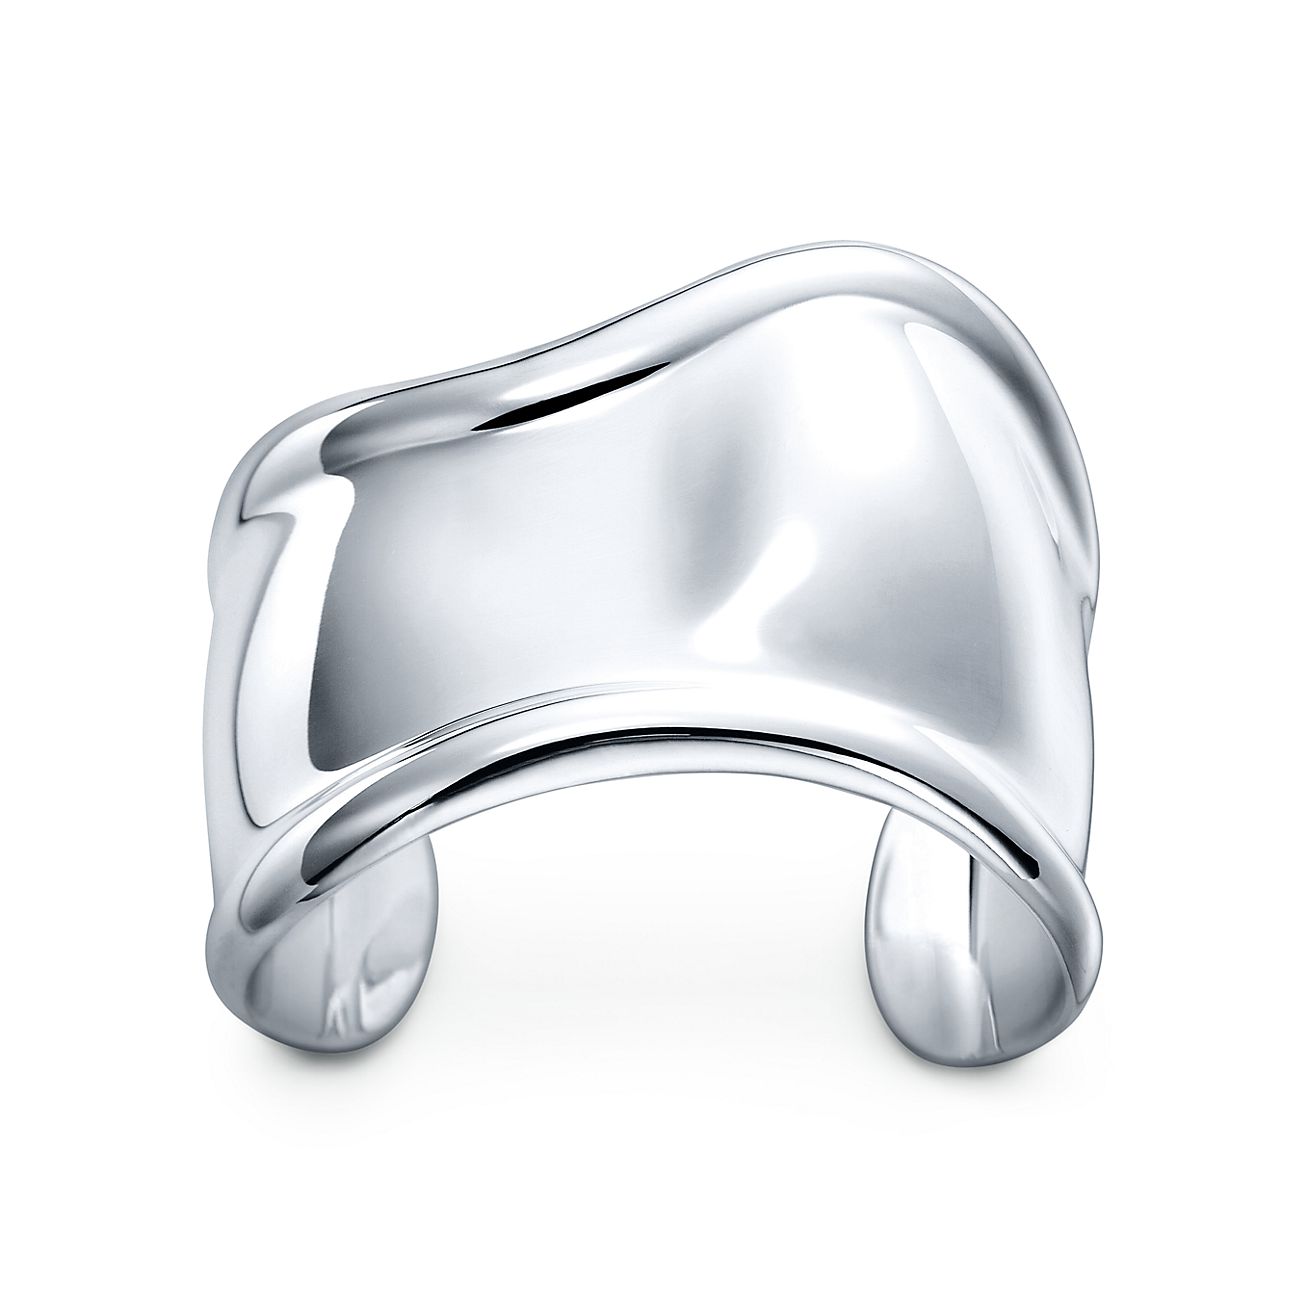 Elsa Peretti™ small Bone cuff in sterling silver, 43 mm wide. | Tiffany